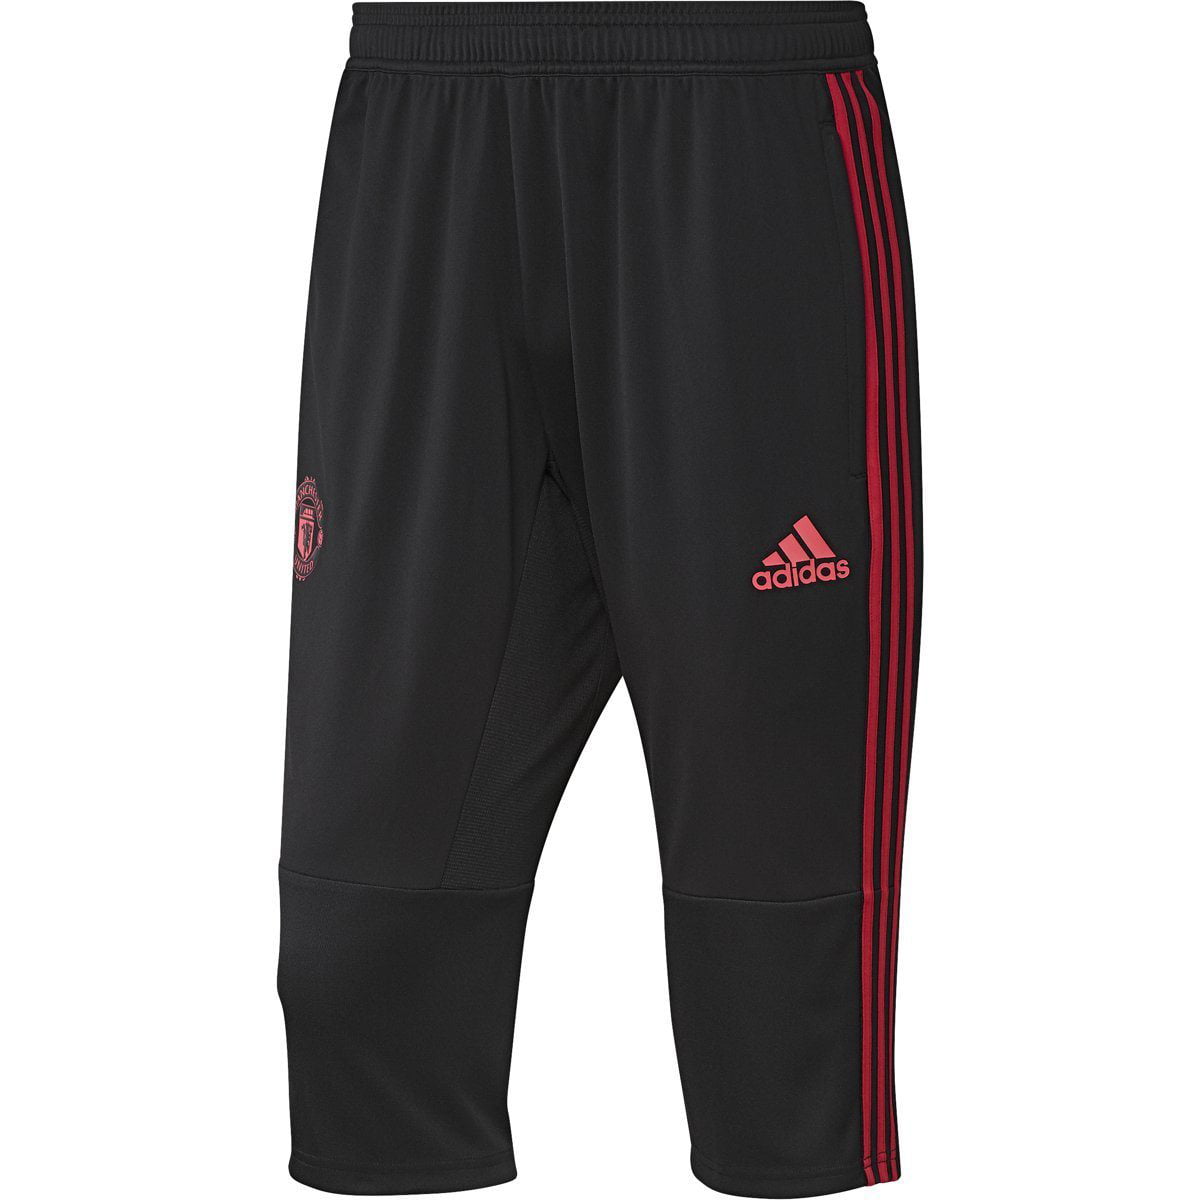 Adidas Men S Soccer Manchester United 3 4 Training Pants Cw7635